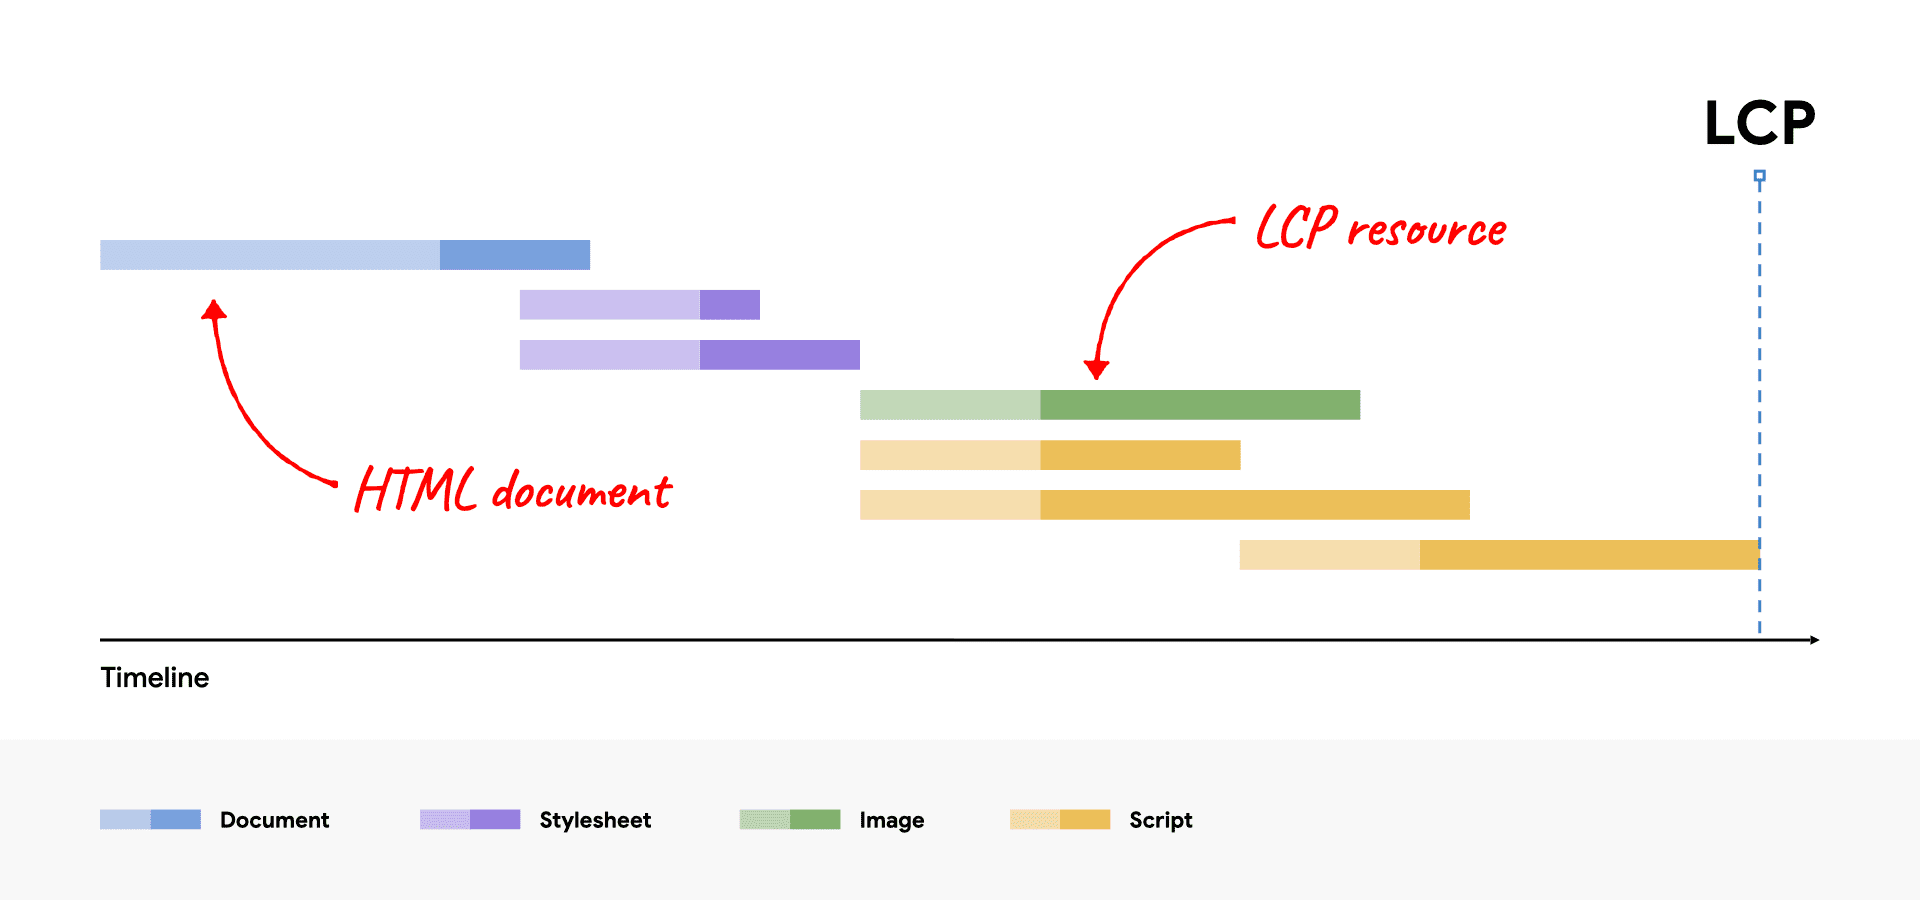 HTML এবং LCP রিসোর্স হাইলাইট করা একটি নেটওয়ার্ক জলপ্রপাত